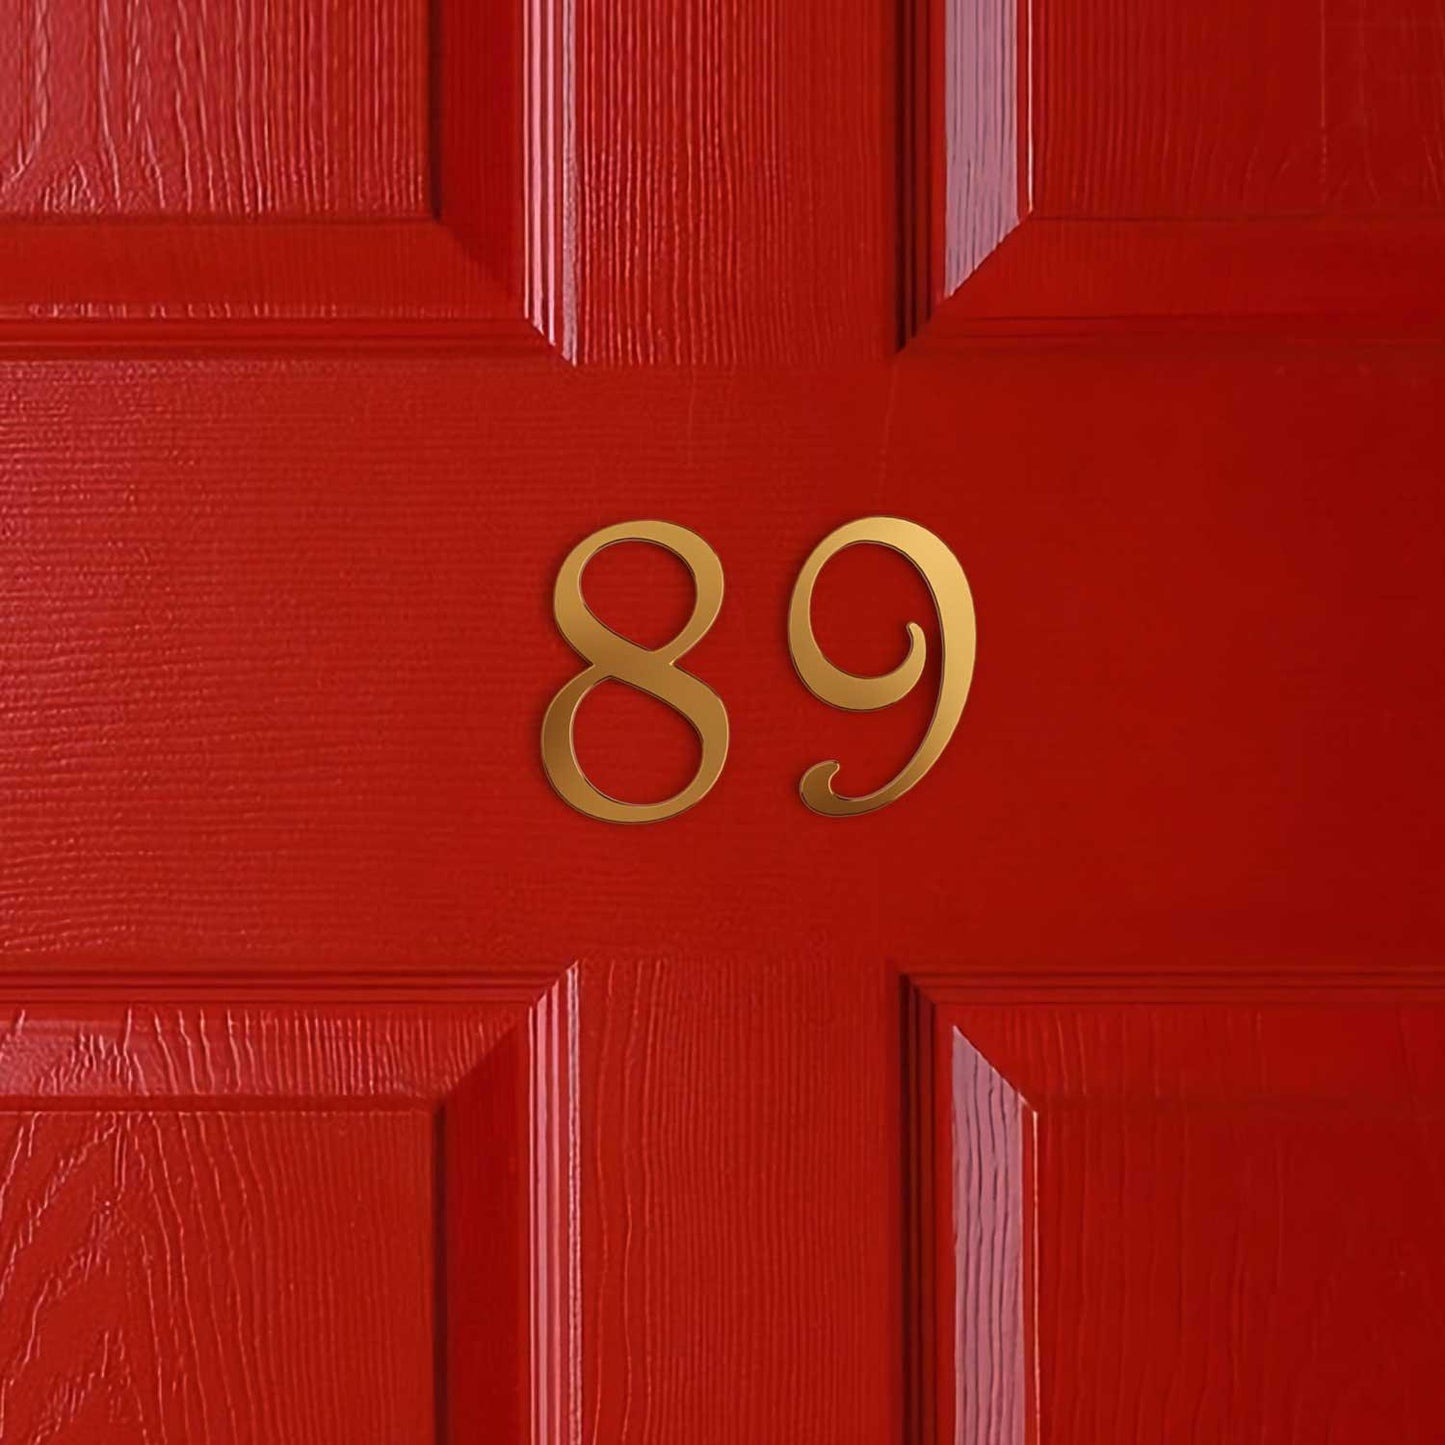 French - Decorative Brass Door Numbers - Housenama